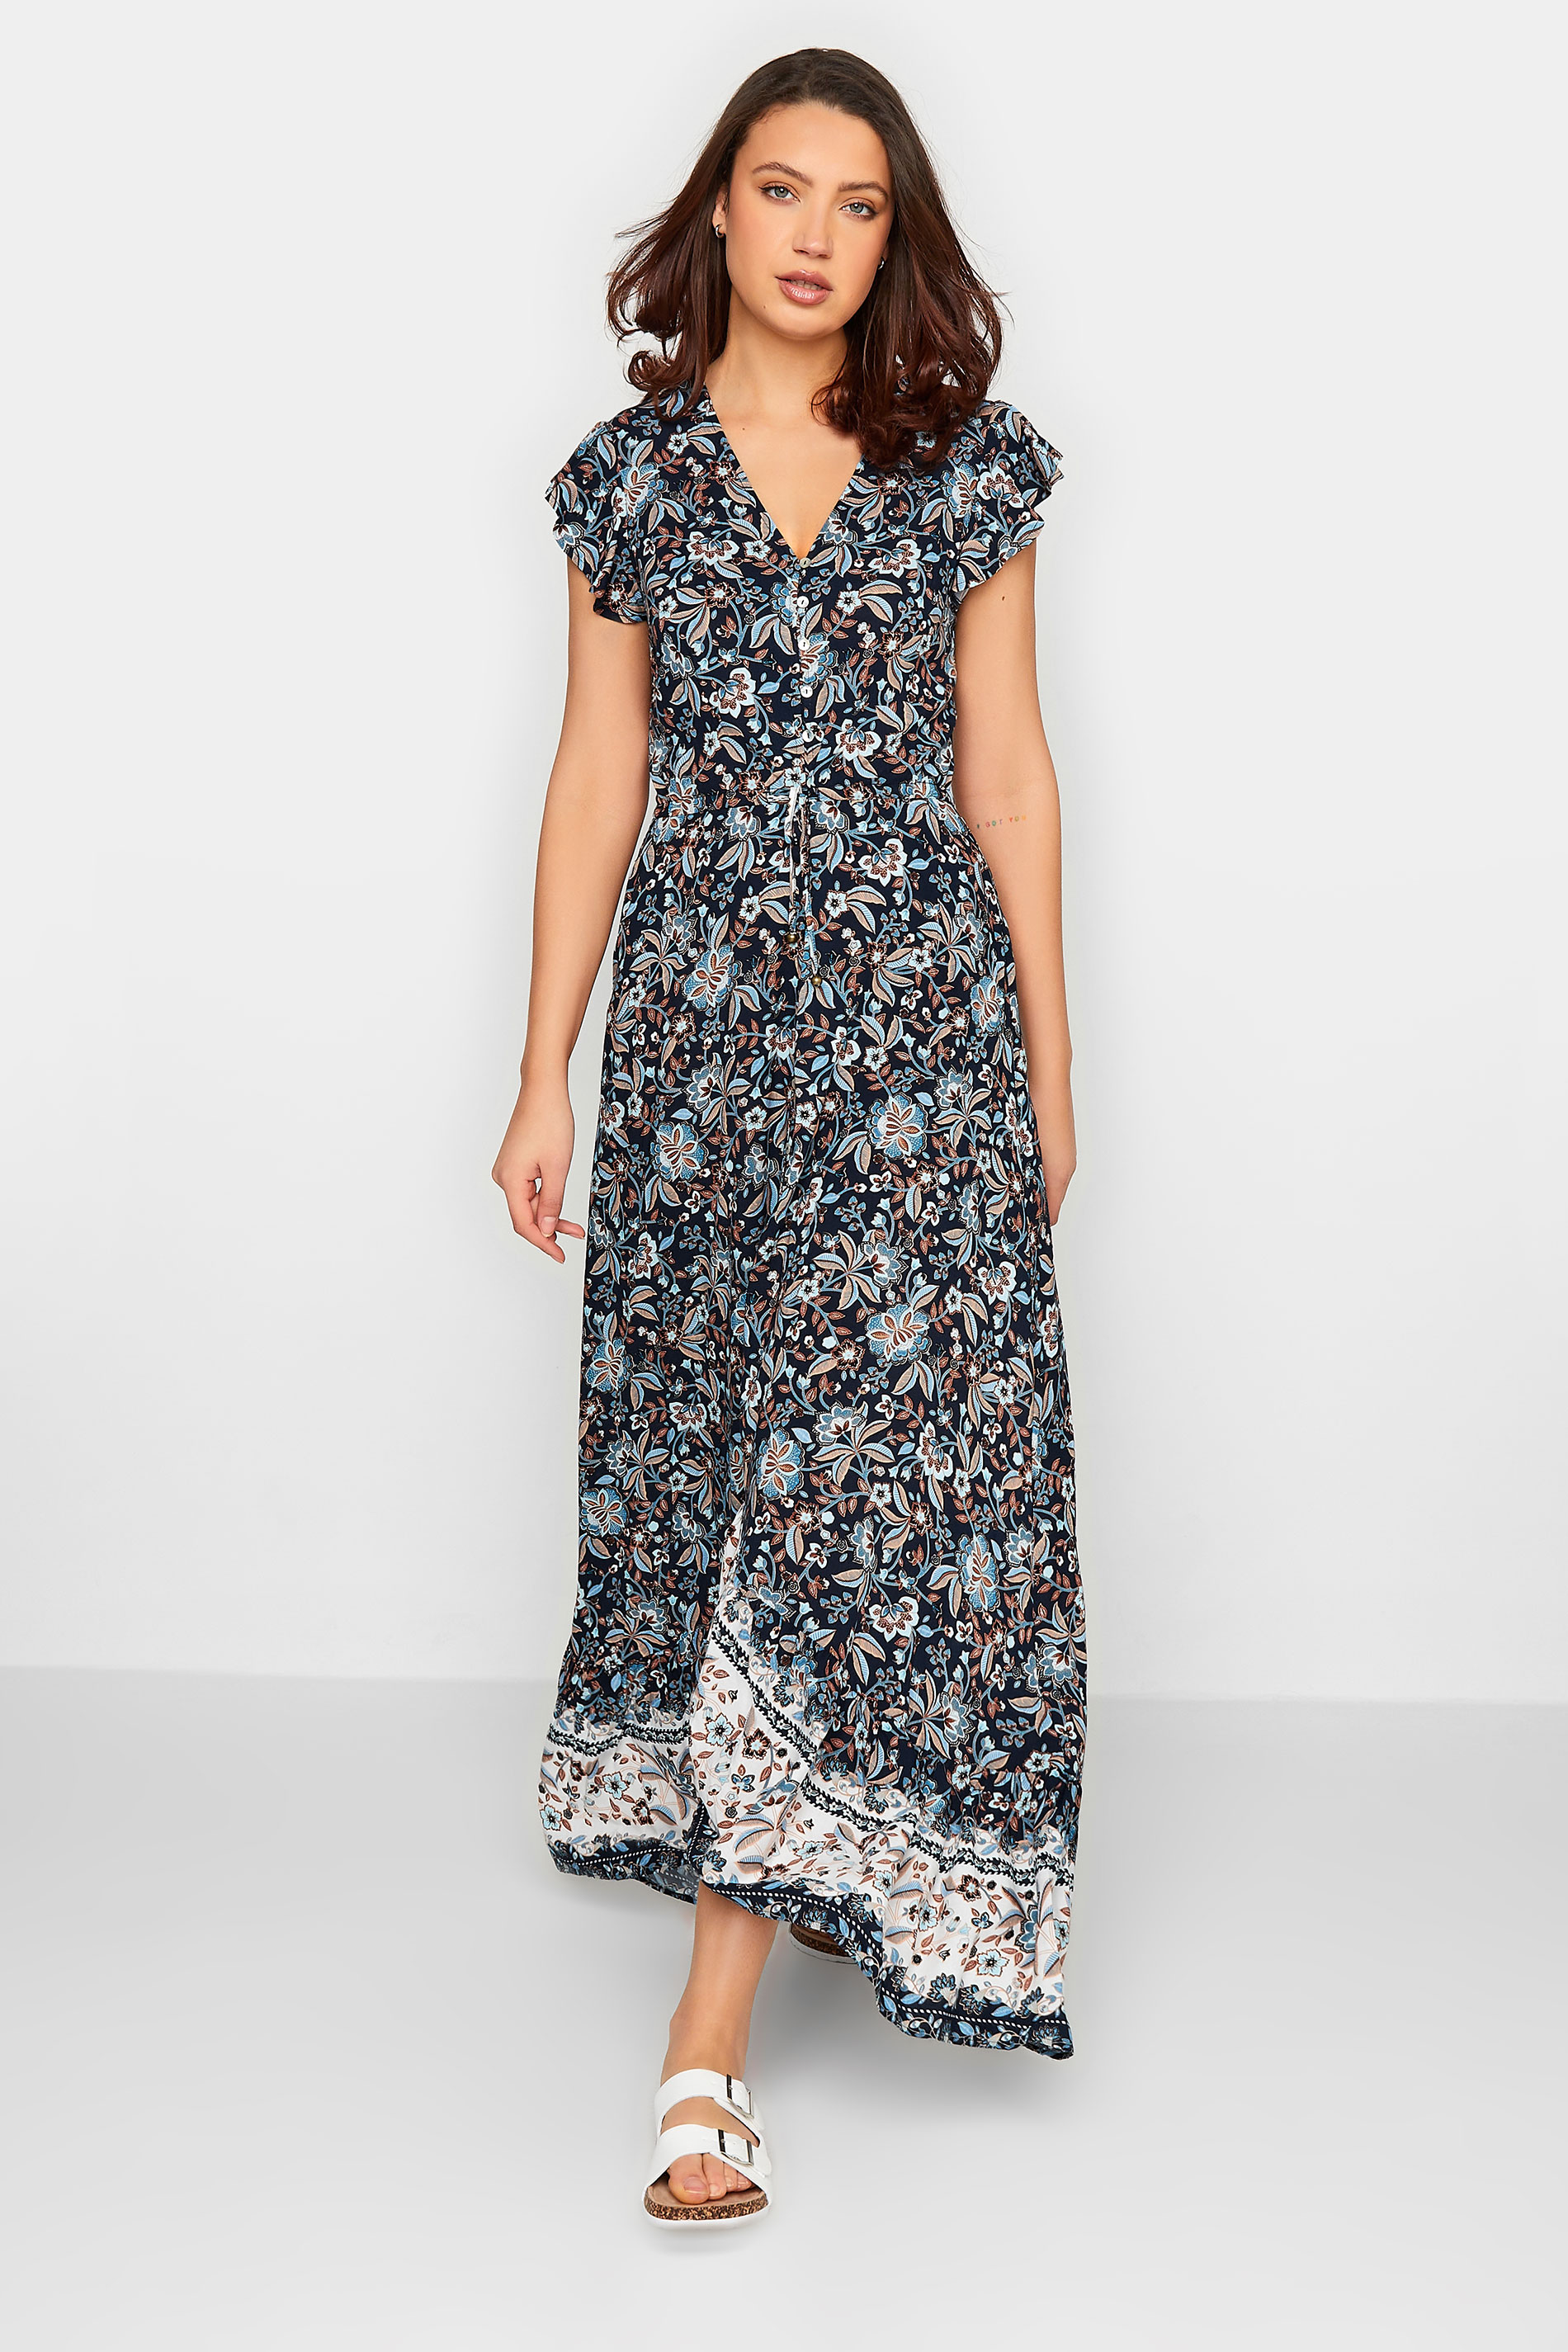 LTS Tall Women's Navy Blue Floral Print Border Maxi Dress | Long Tall Sally 2